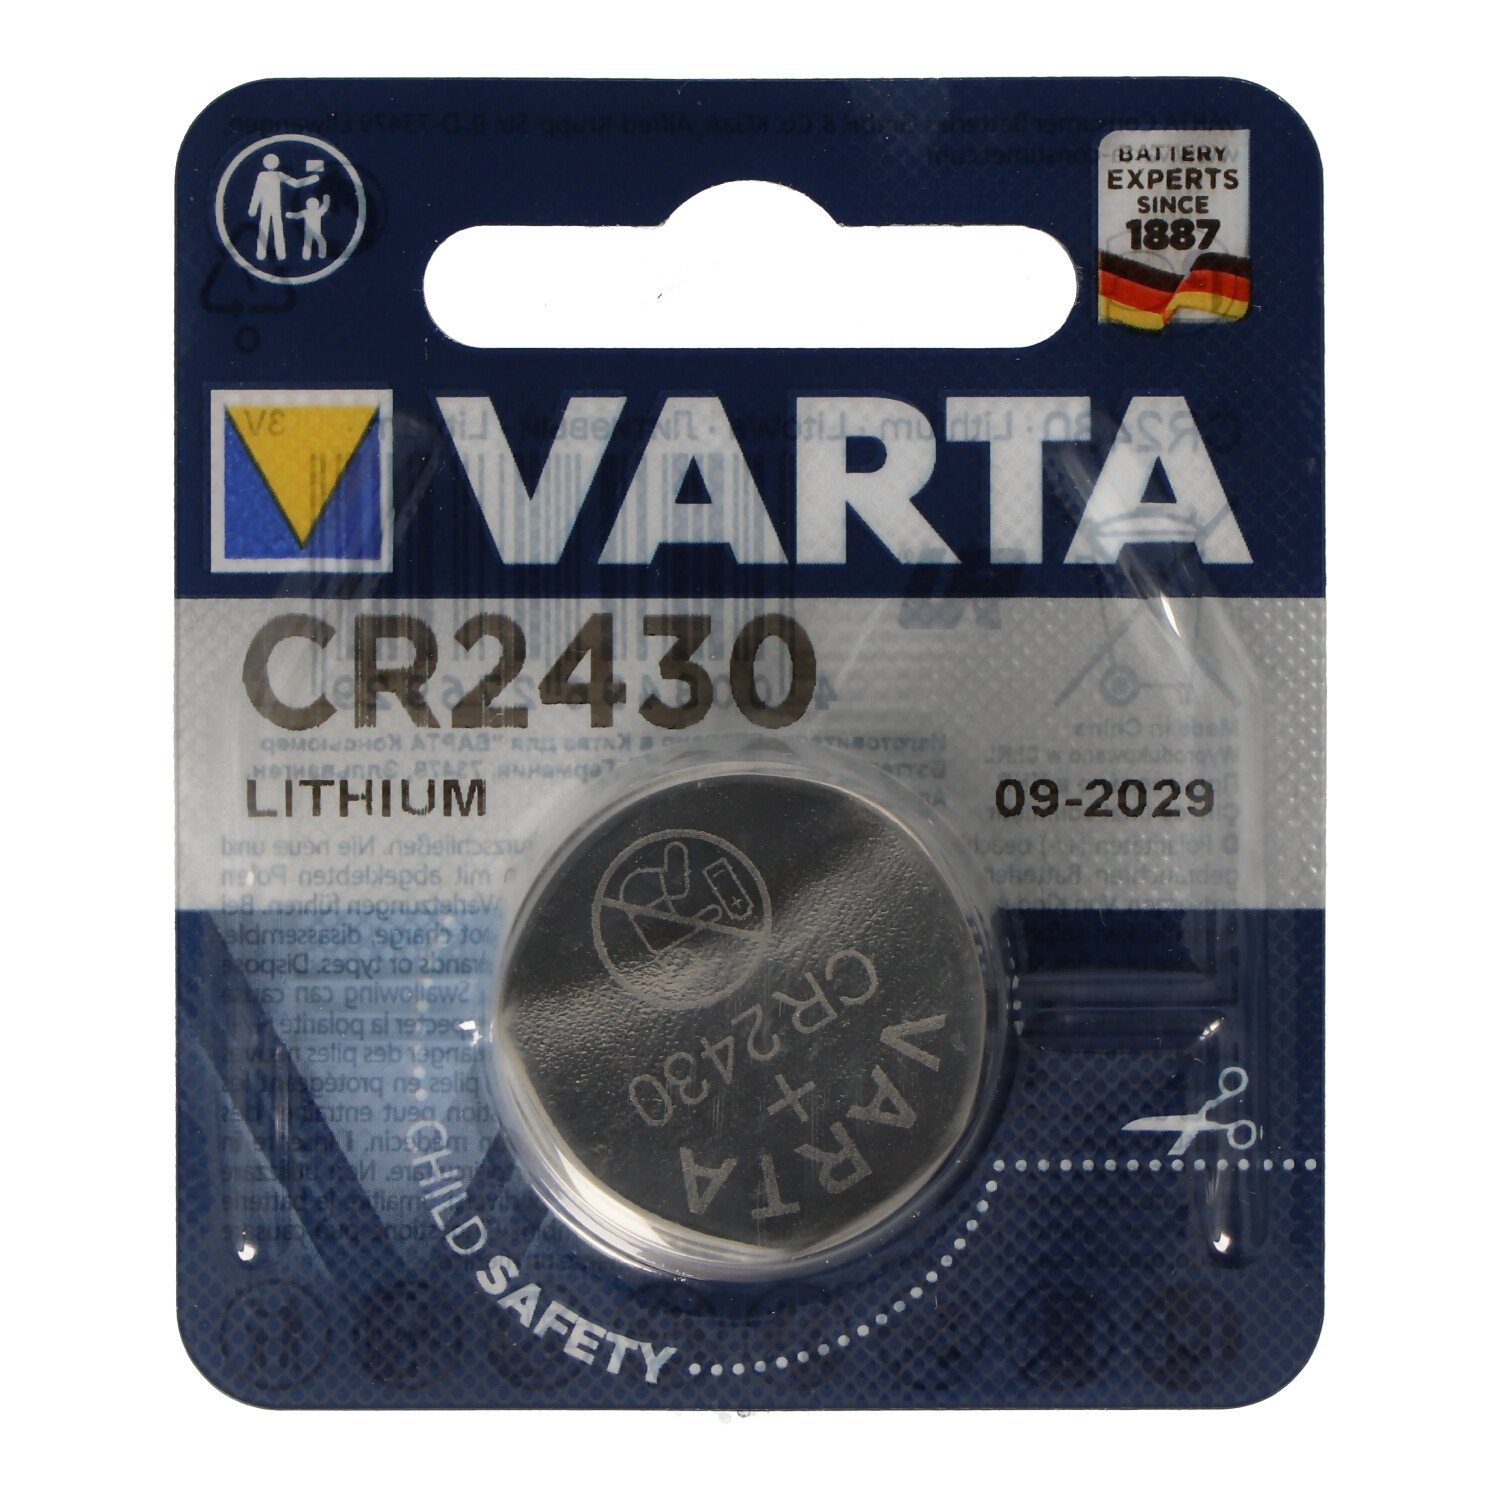 VARTA BATLI08 Lithium Knopfzelle 3 Volt Batterie BATLI08 passend für Daitem Akku 280 mAh (3,0 V)